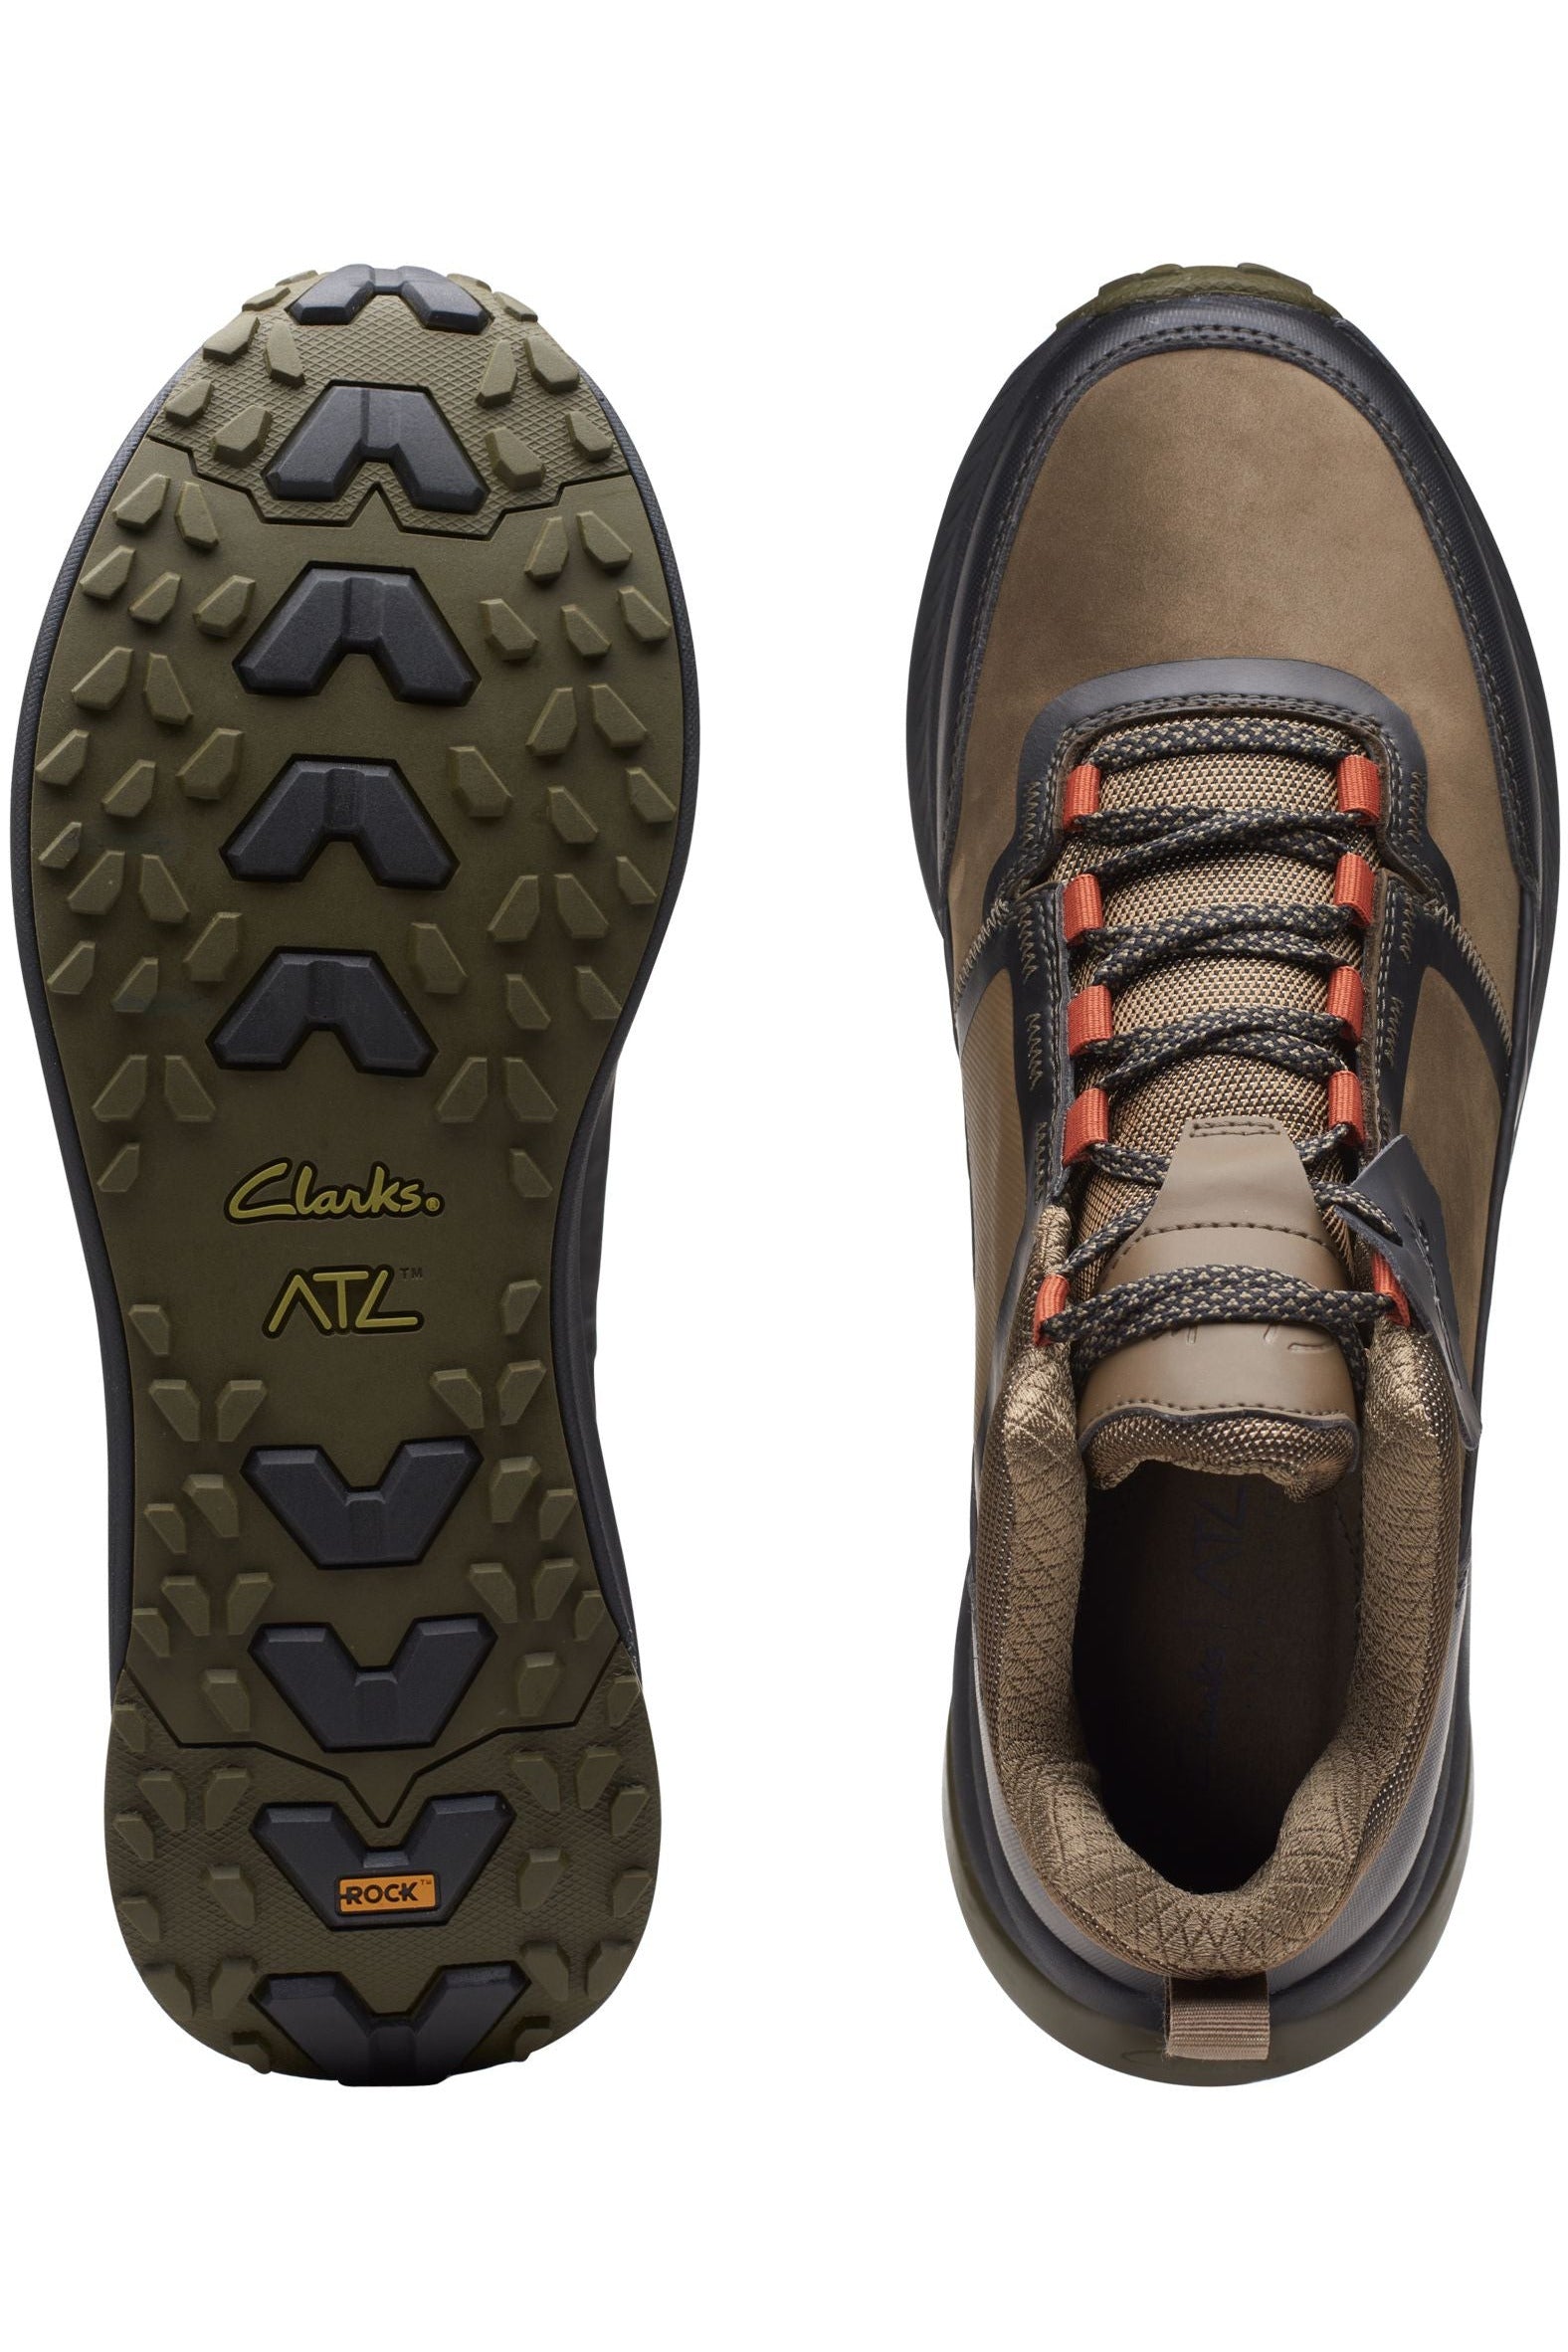 repetición Centelleo malta Clarks Mens ATL Trail Up waterproof dark olive - Meeks Shoes